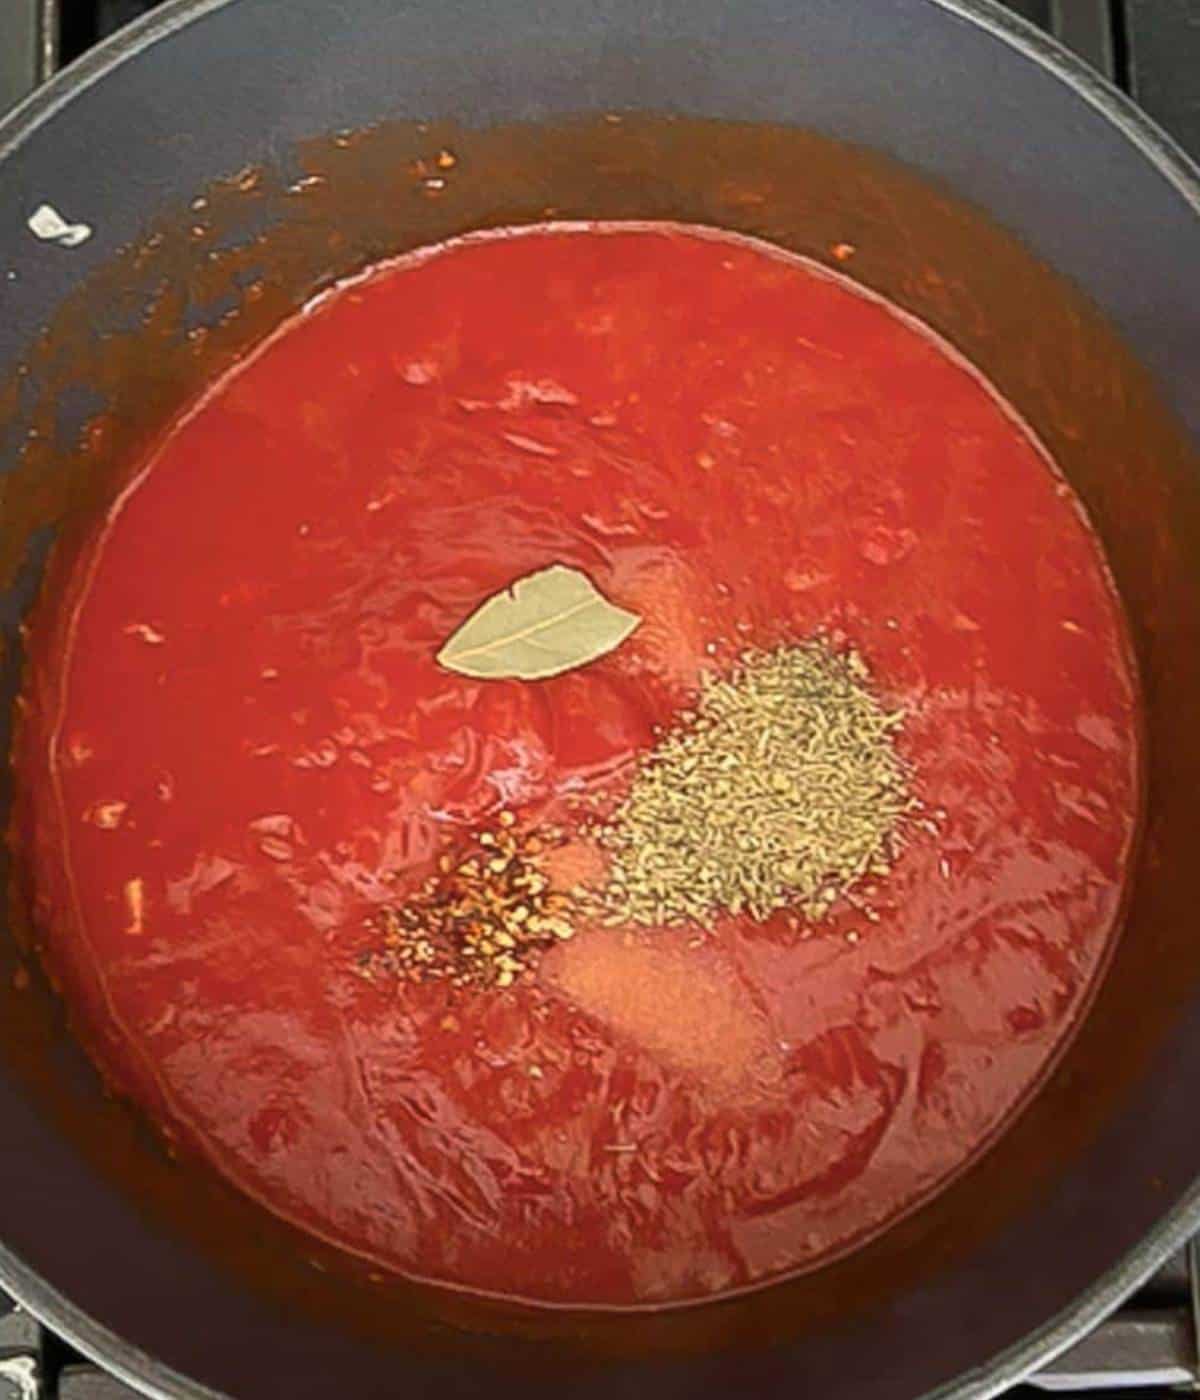 Seasonings in pasta sauce.